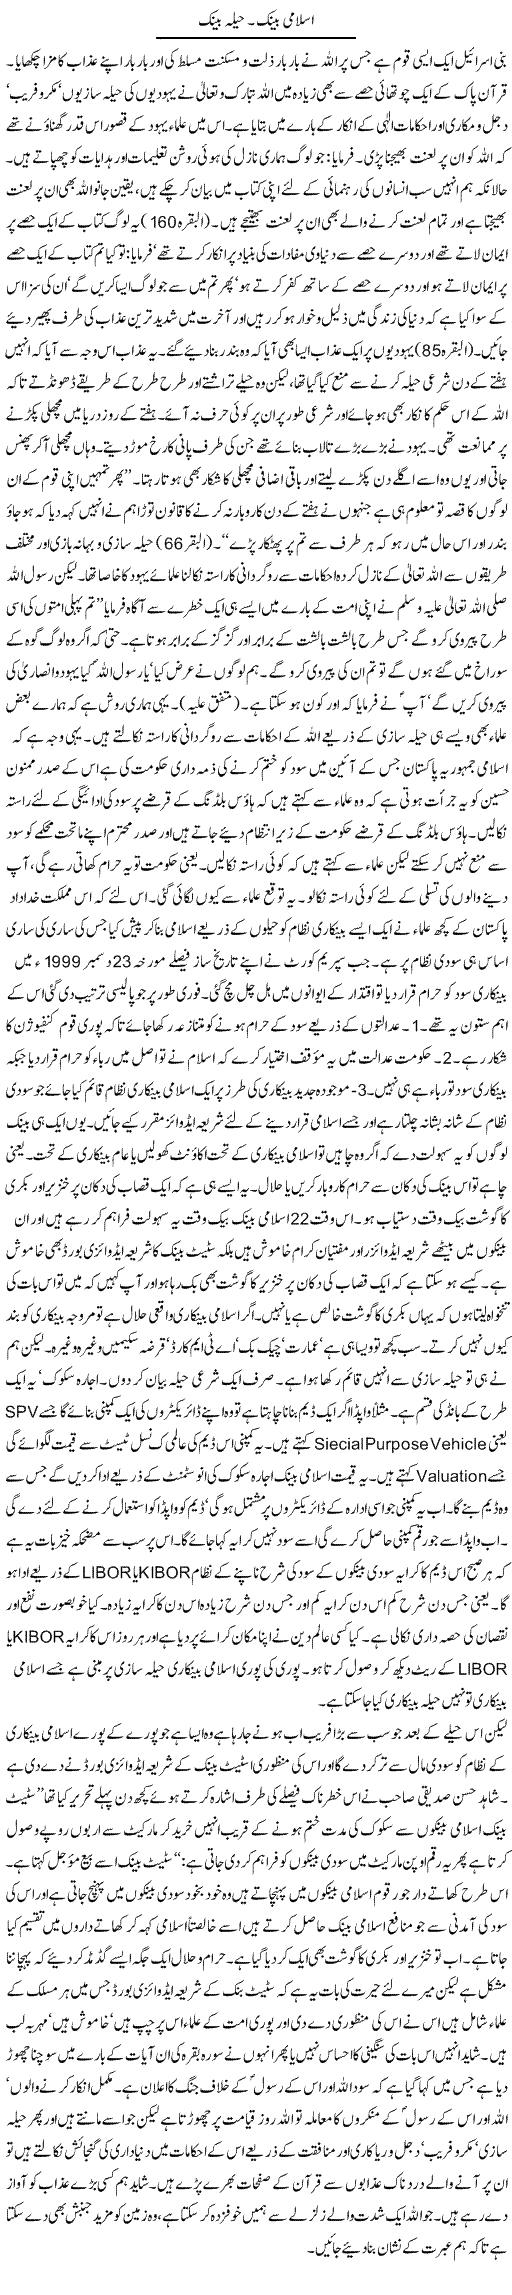 Islami Bank. Heela Bank | Orya Maqbool Jan | Daily Urdu Columns